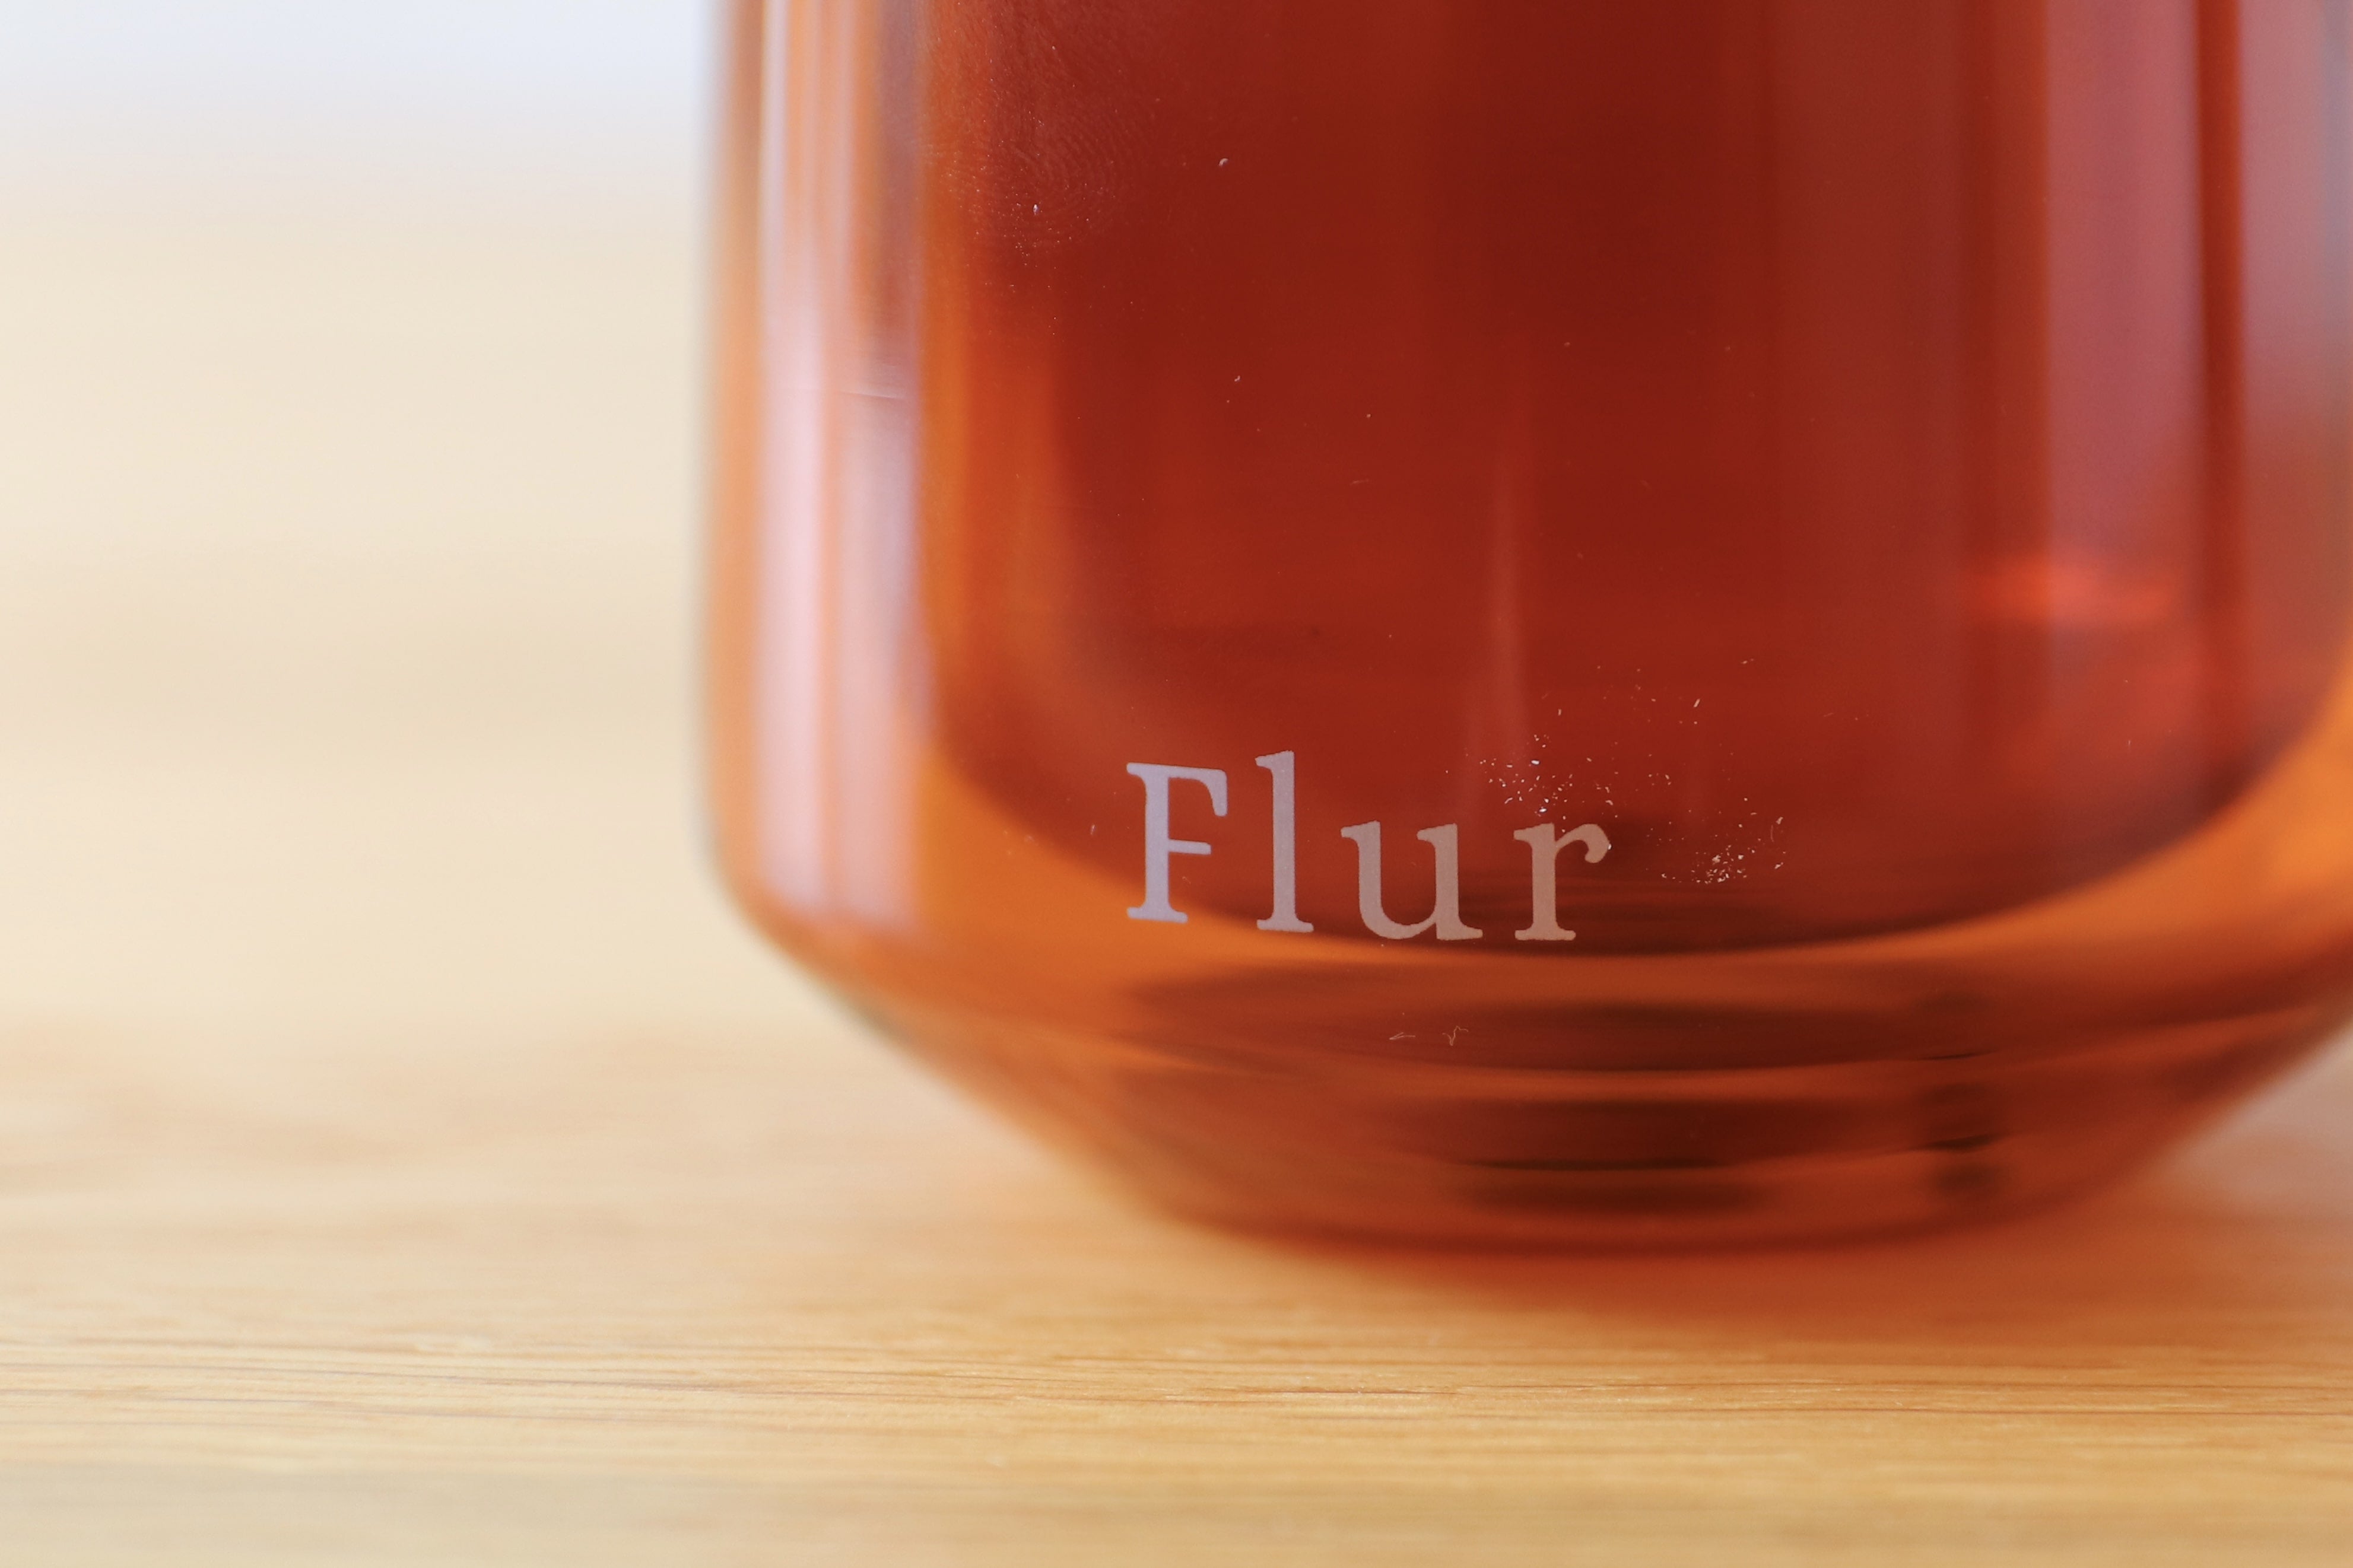 Flur Glassware  Premium Glassware Designed for Coffee